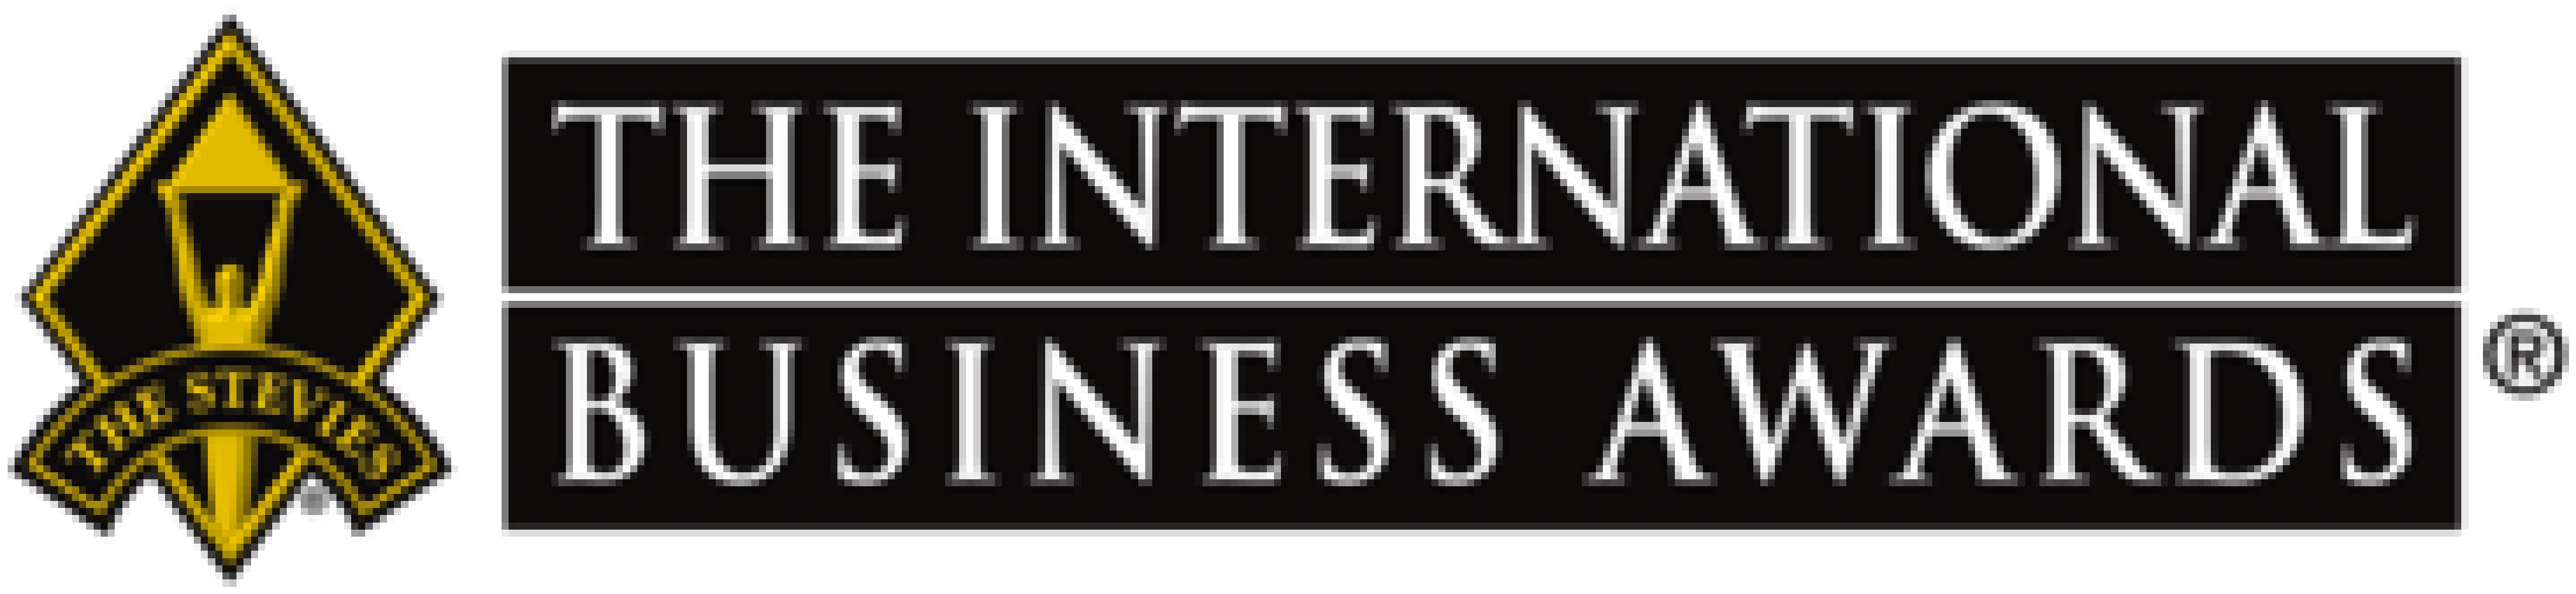 The International Business Awards